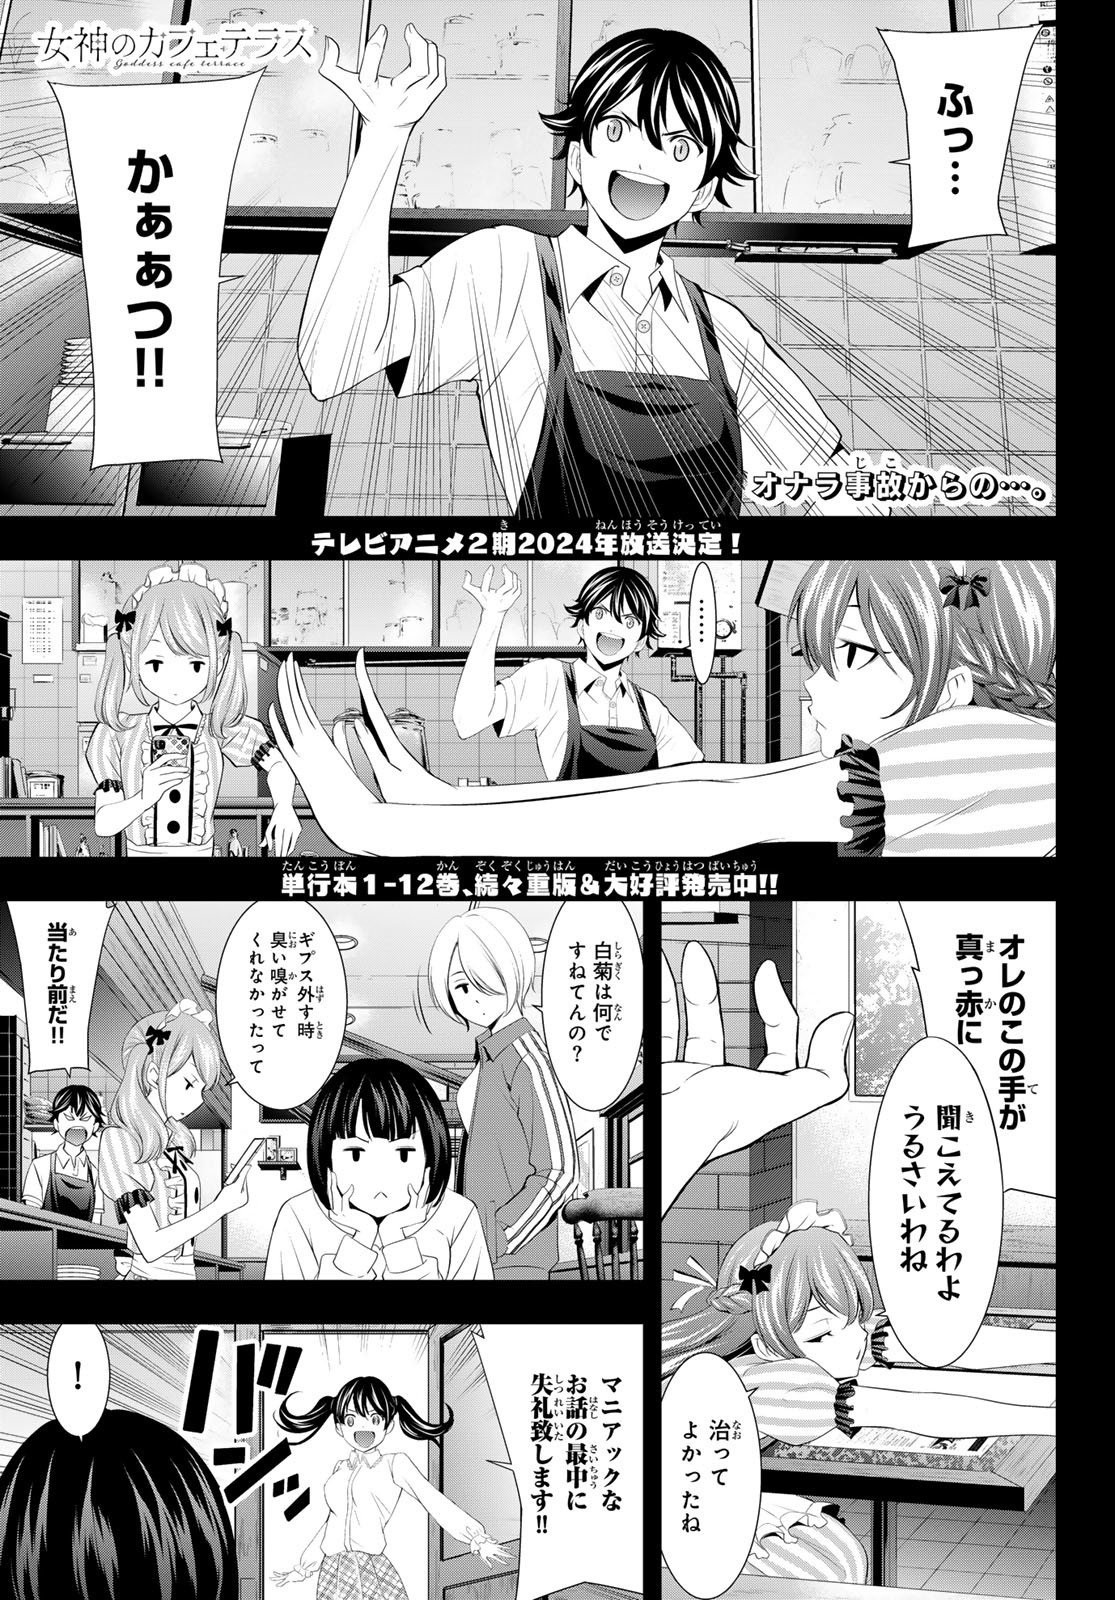 Megami no Cafe Terace - Chapter 120 - Page 1 - Raw Manga 生漫画